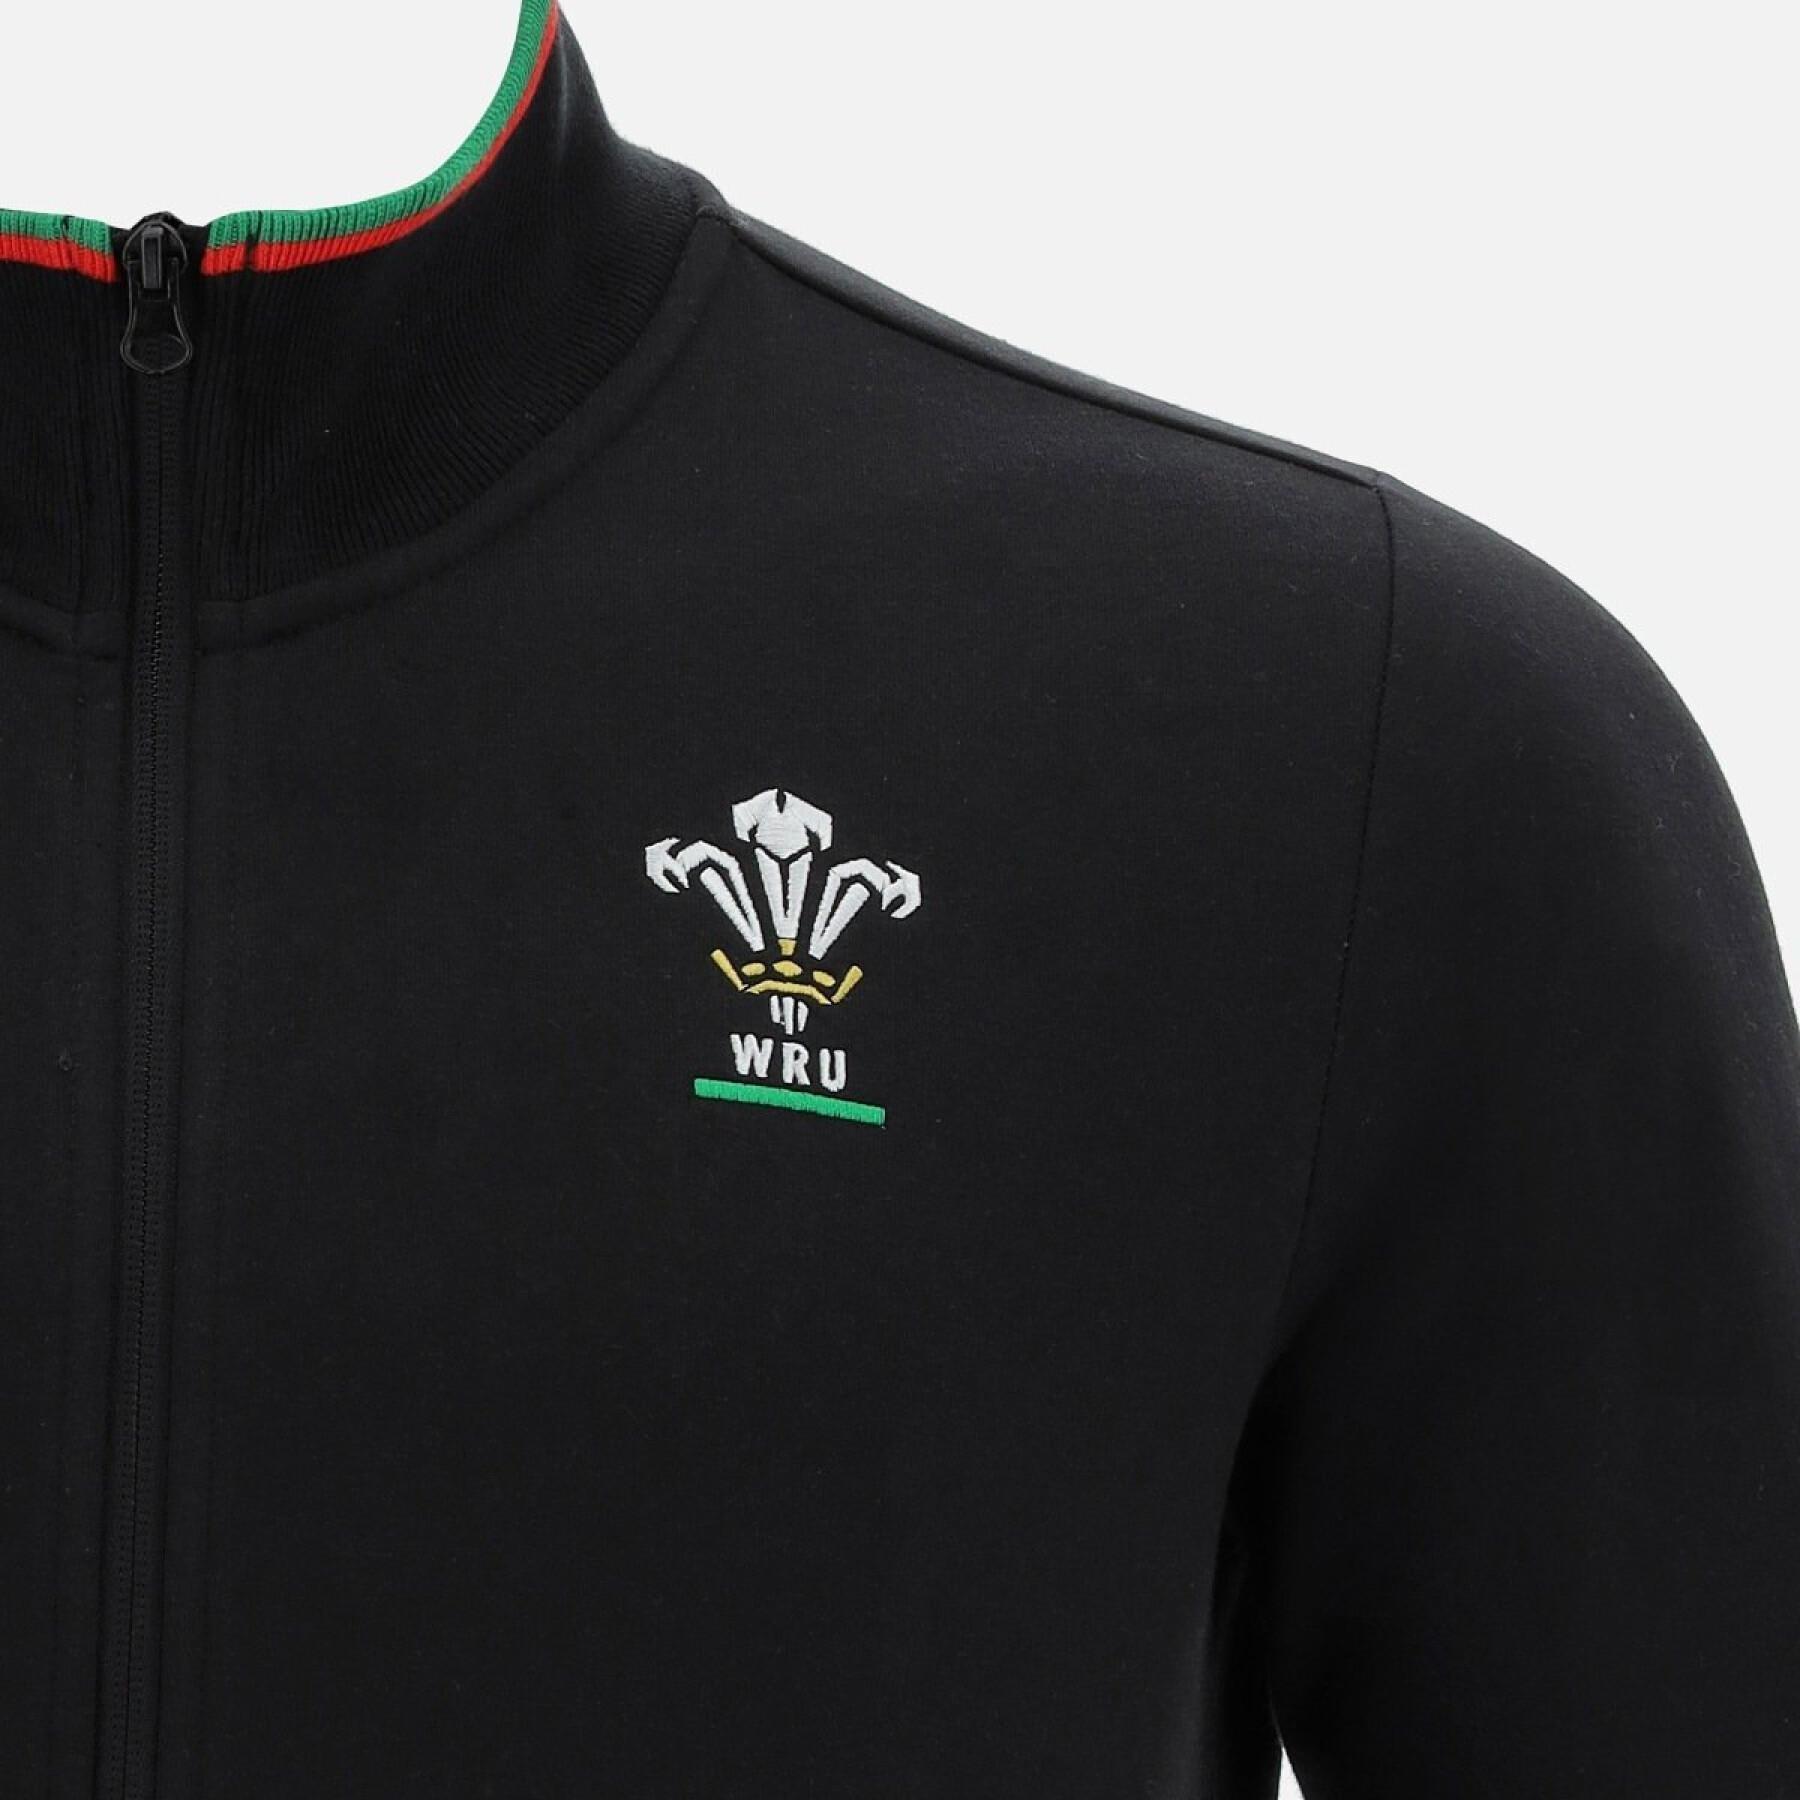 Full zip sweatshirt Pays de Galles Rugby XV WRC Merch CA LF